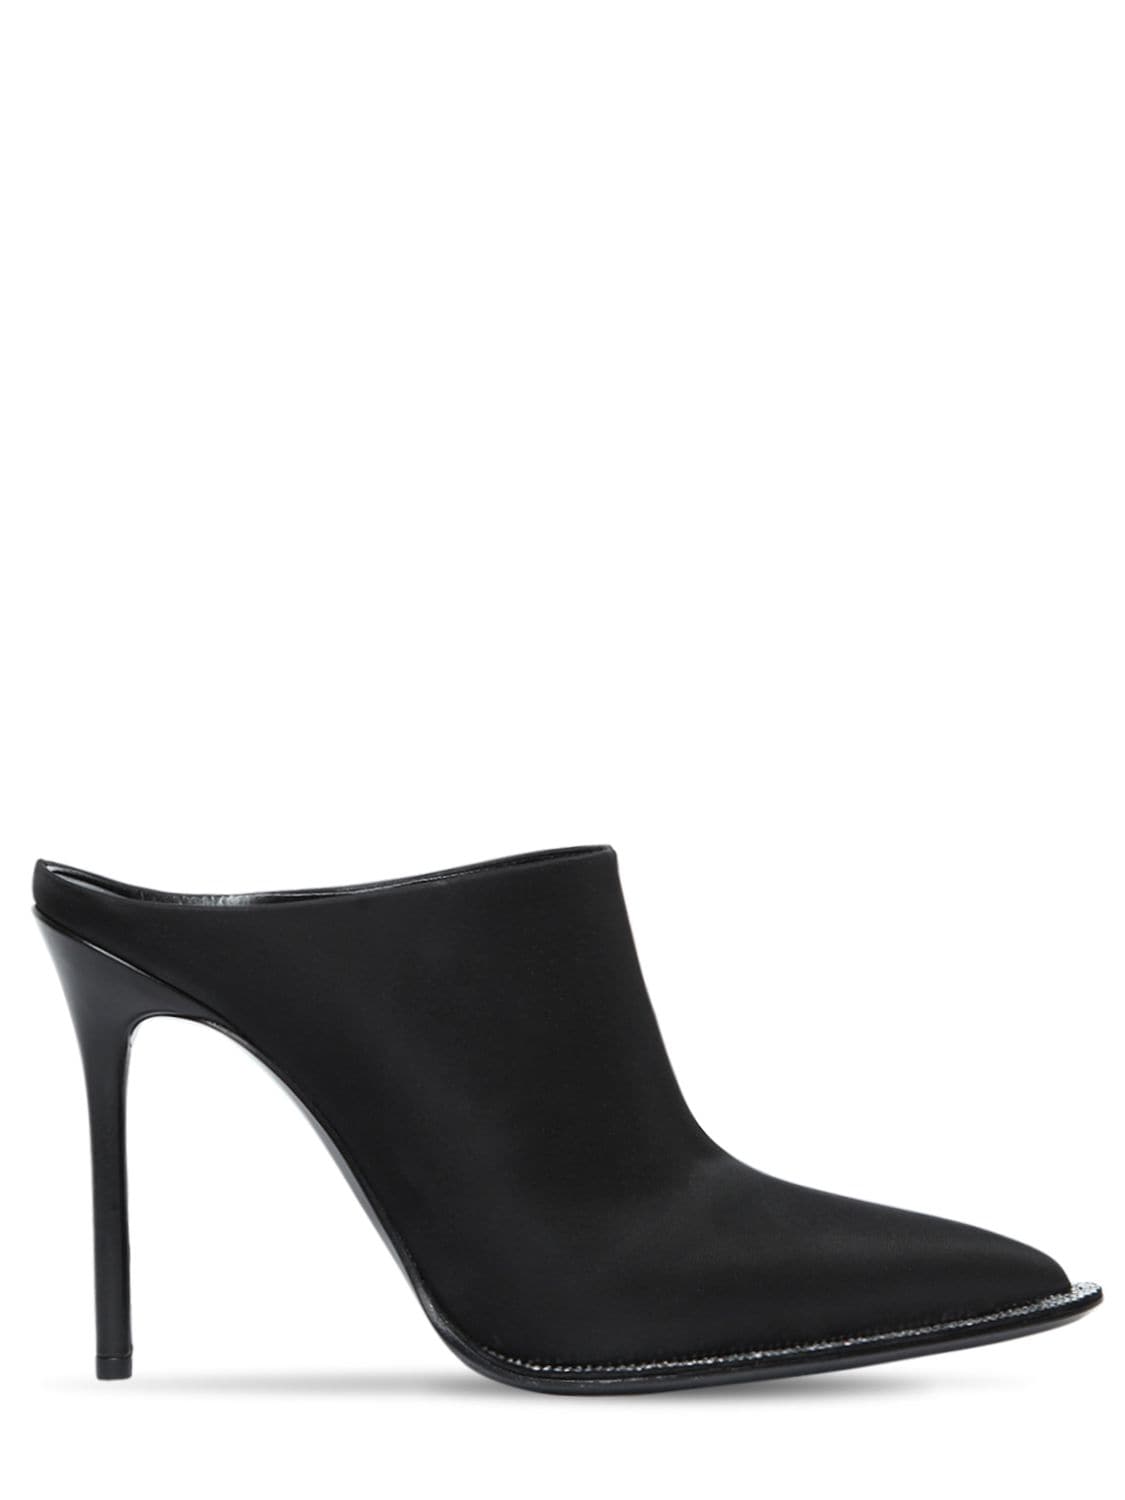 black high heel mules womens